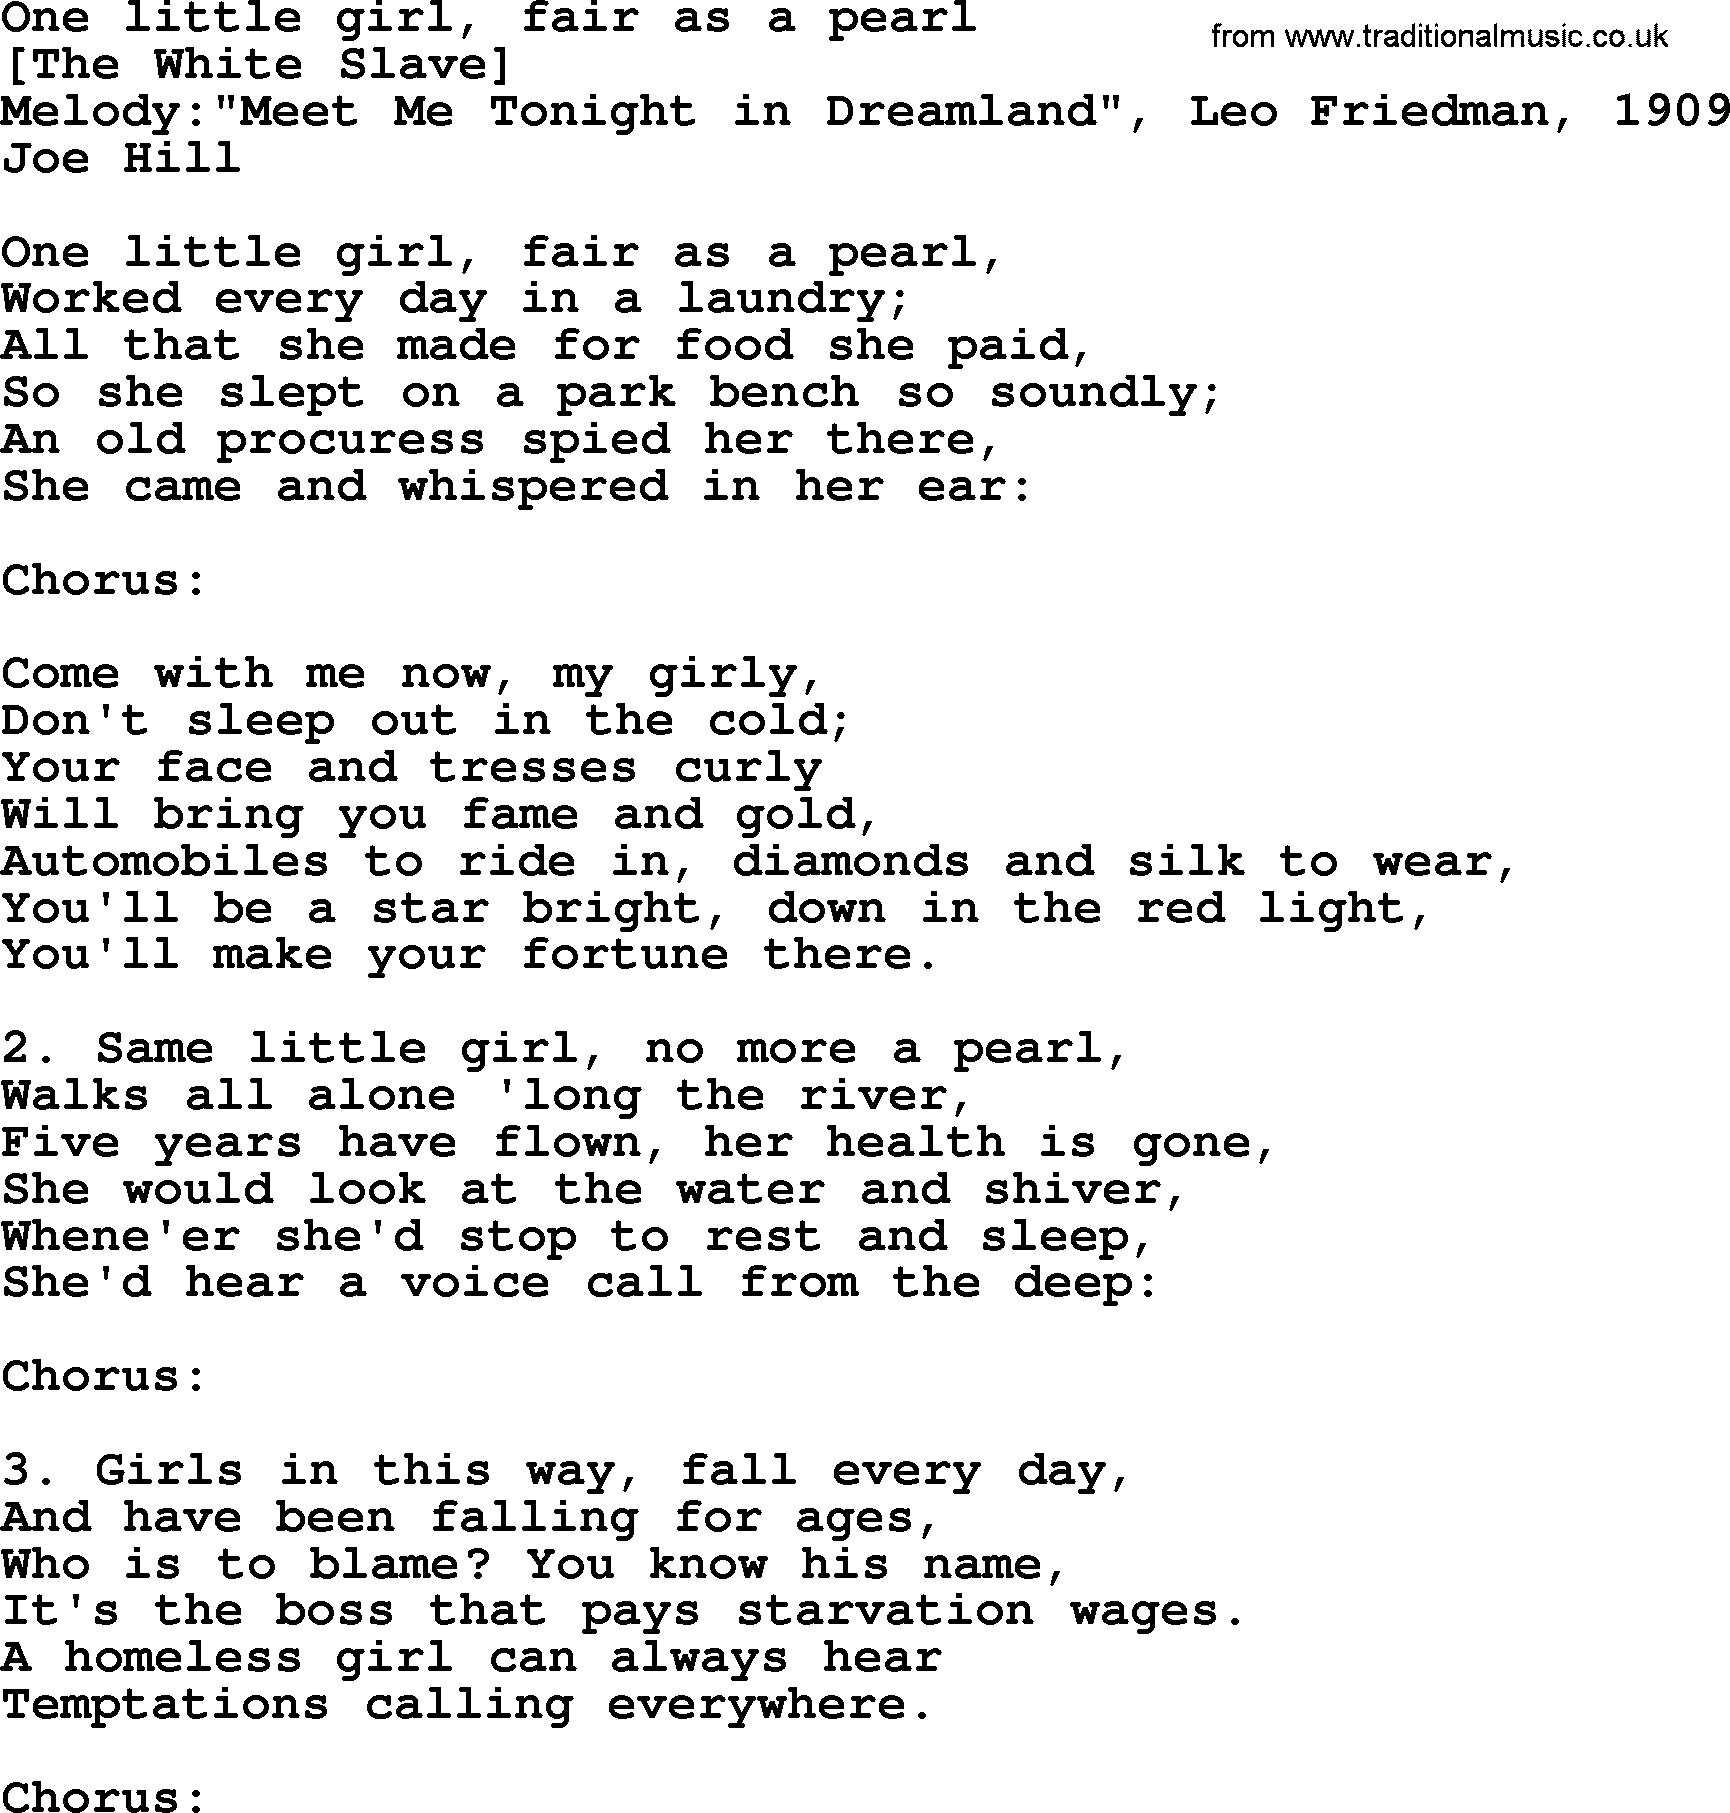 Old American Song: One Little Girl, Fair As A Pearl, lyrics